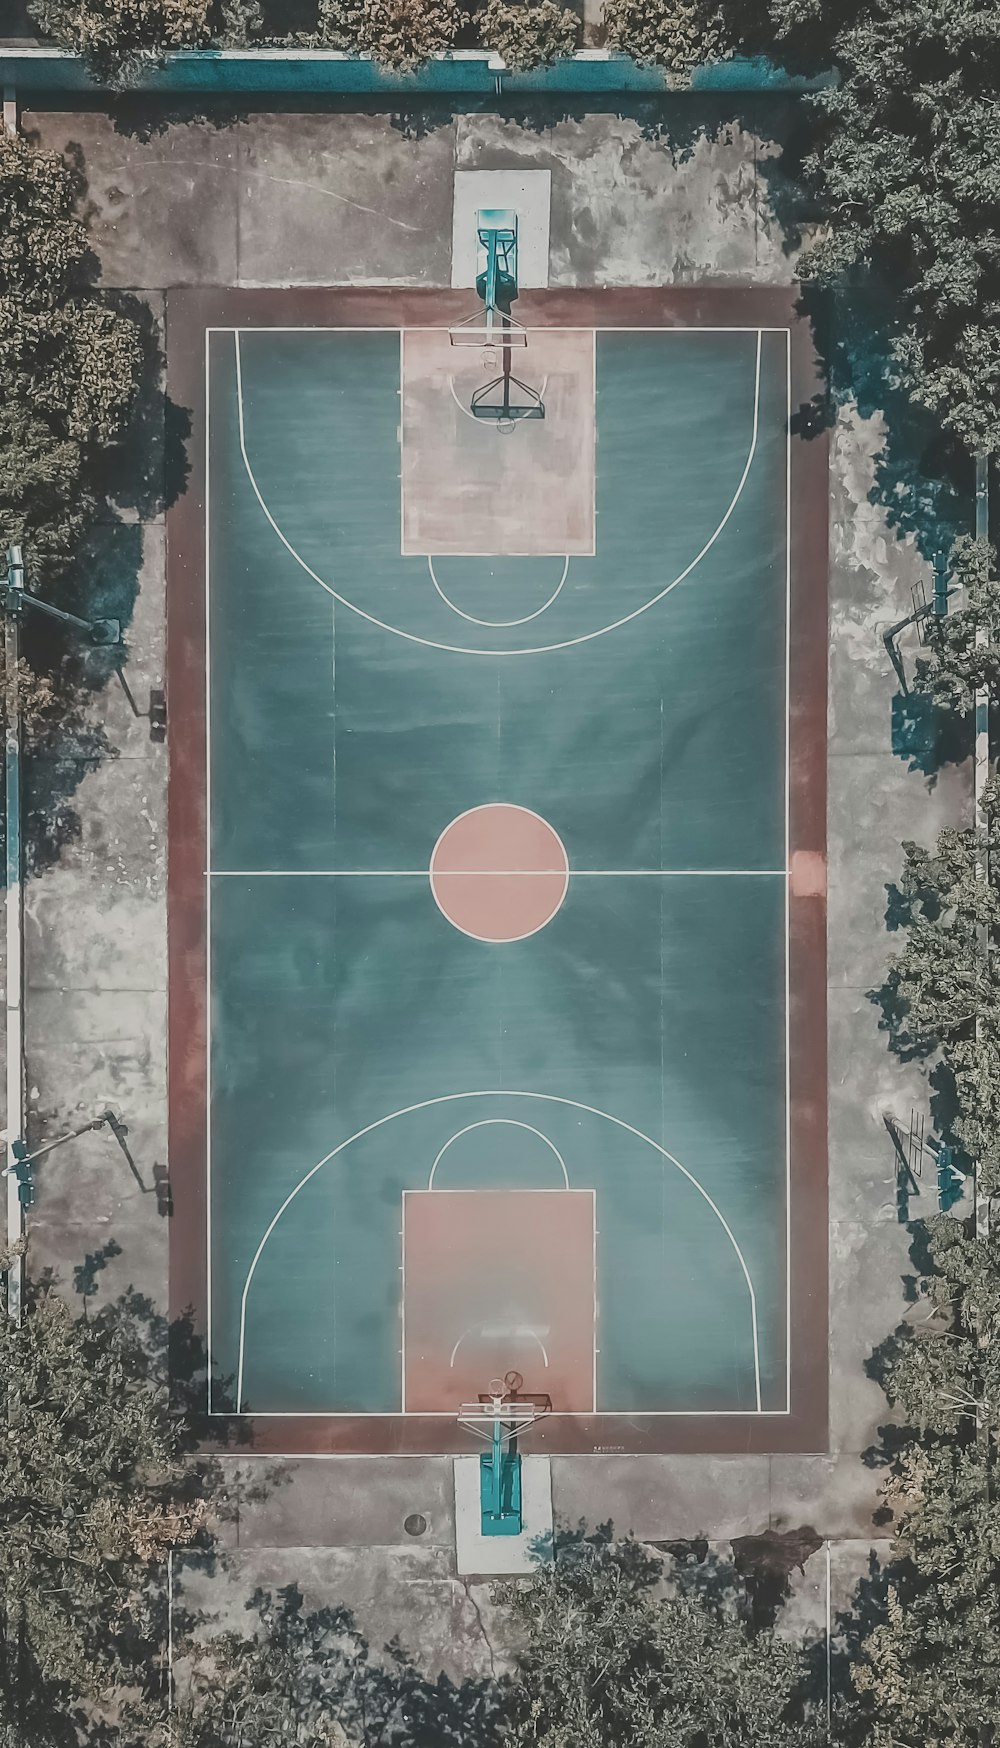 bird's eye view photography of basket ball court